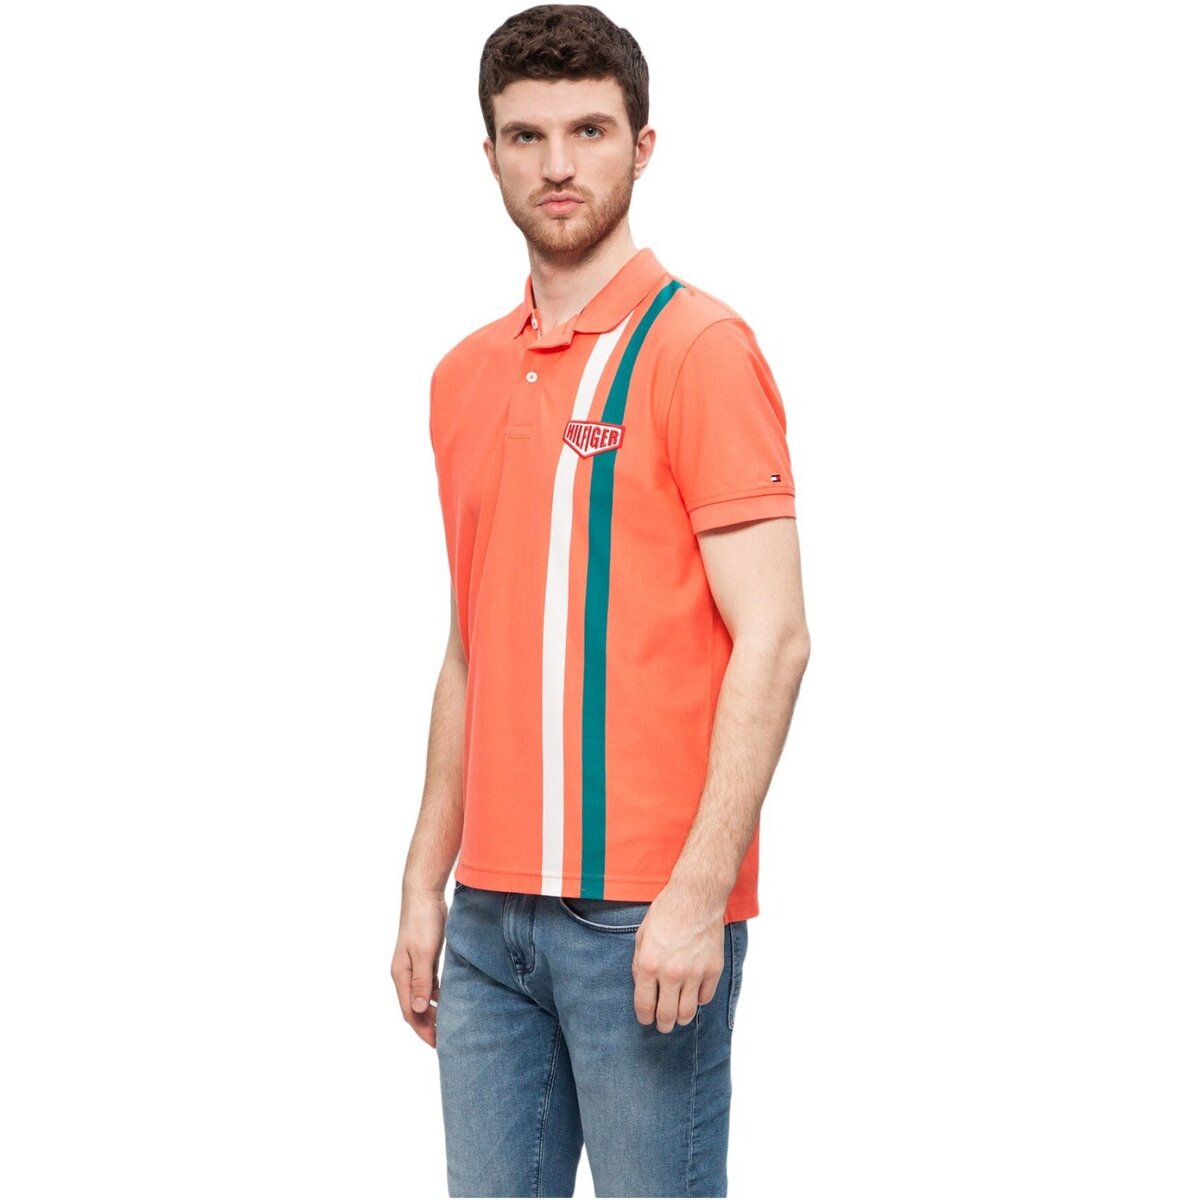 textil Herre T-shirts & poloer Tommy Hilfiger MW0MW07450 Orange